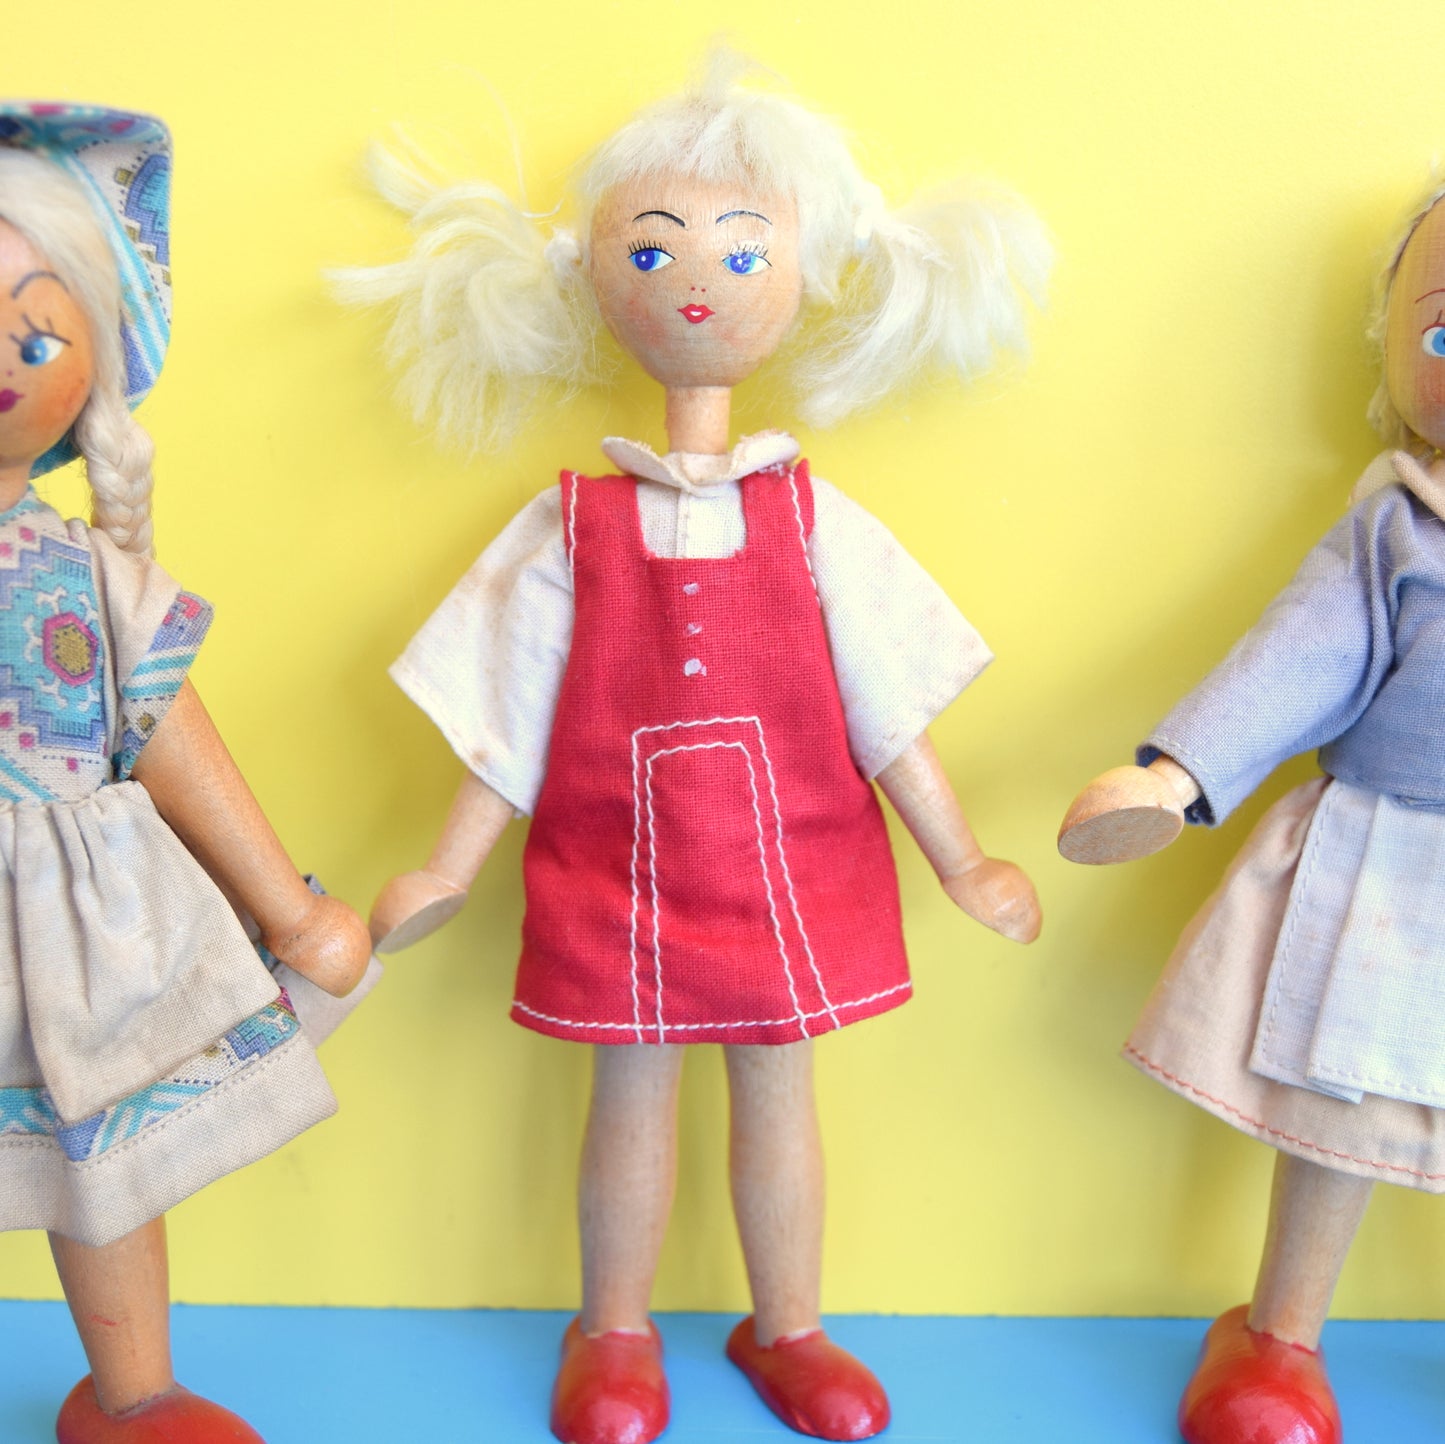 Vintage 1950s Wooden Polish Peg Dollies - Choice